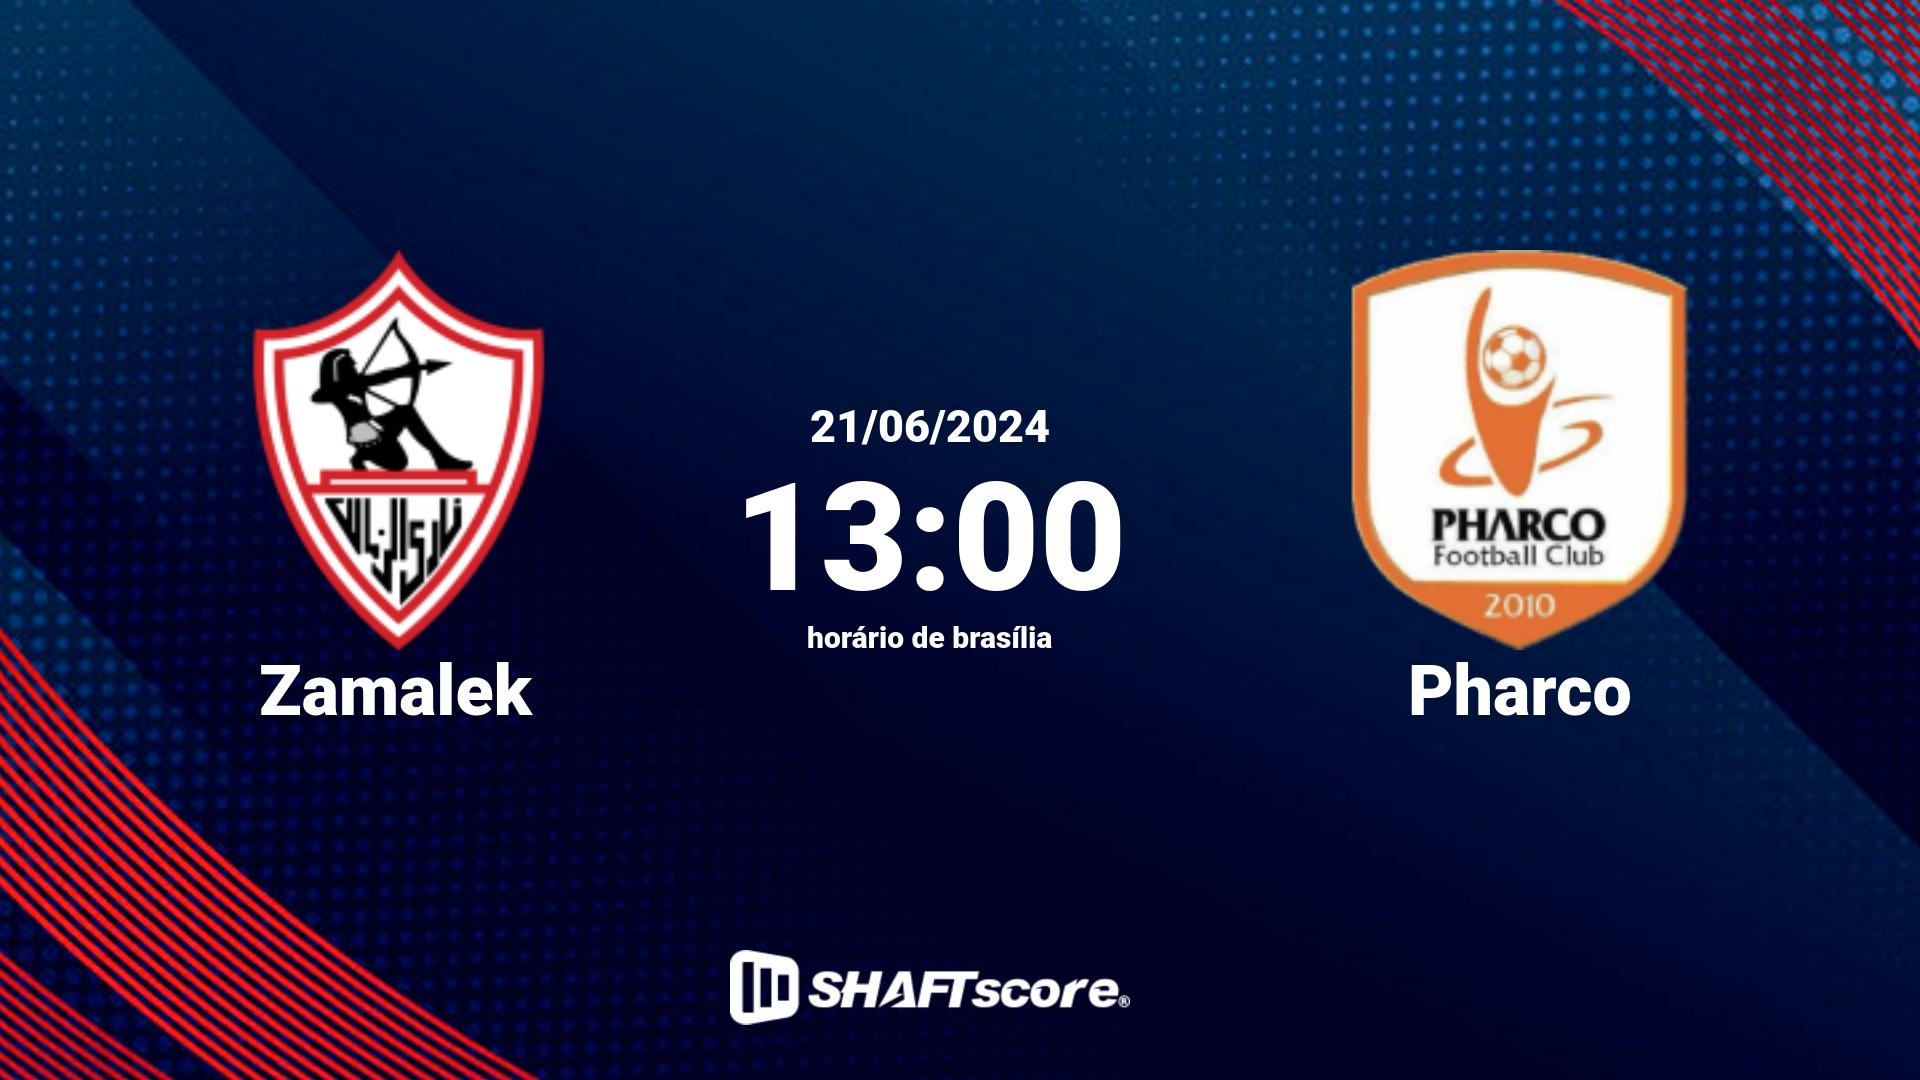 Estatísticas do jogo Zamalek vs Pharco 21.06 13:00